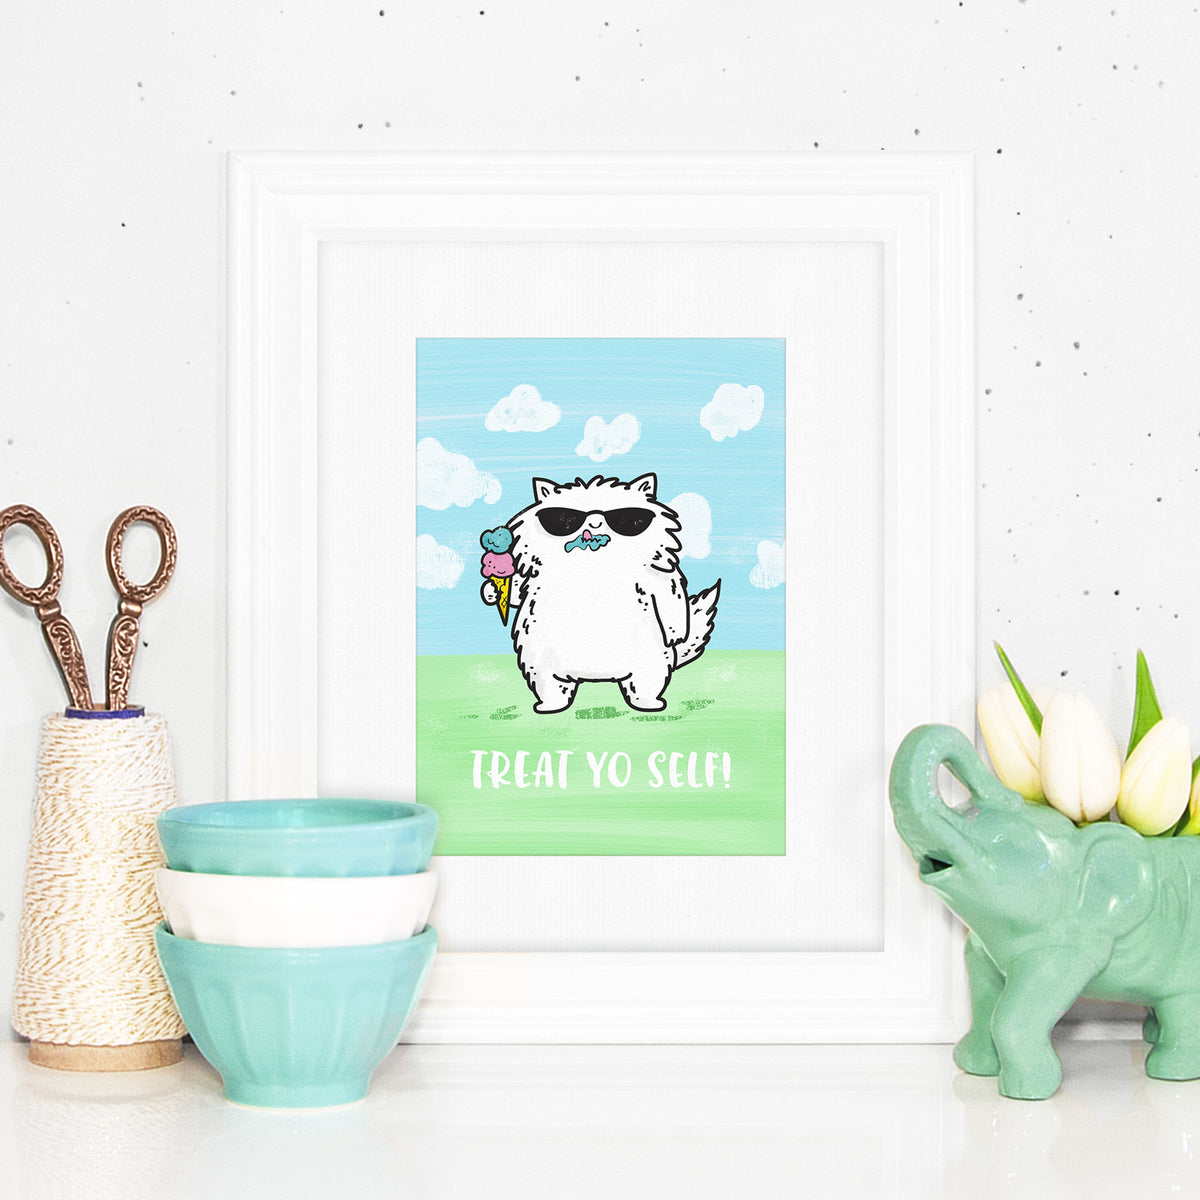 Treat Yo Self! ~ Ice cream cool cat art print by My Cat Is People.